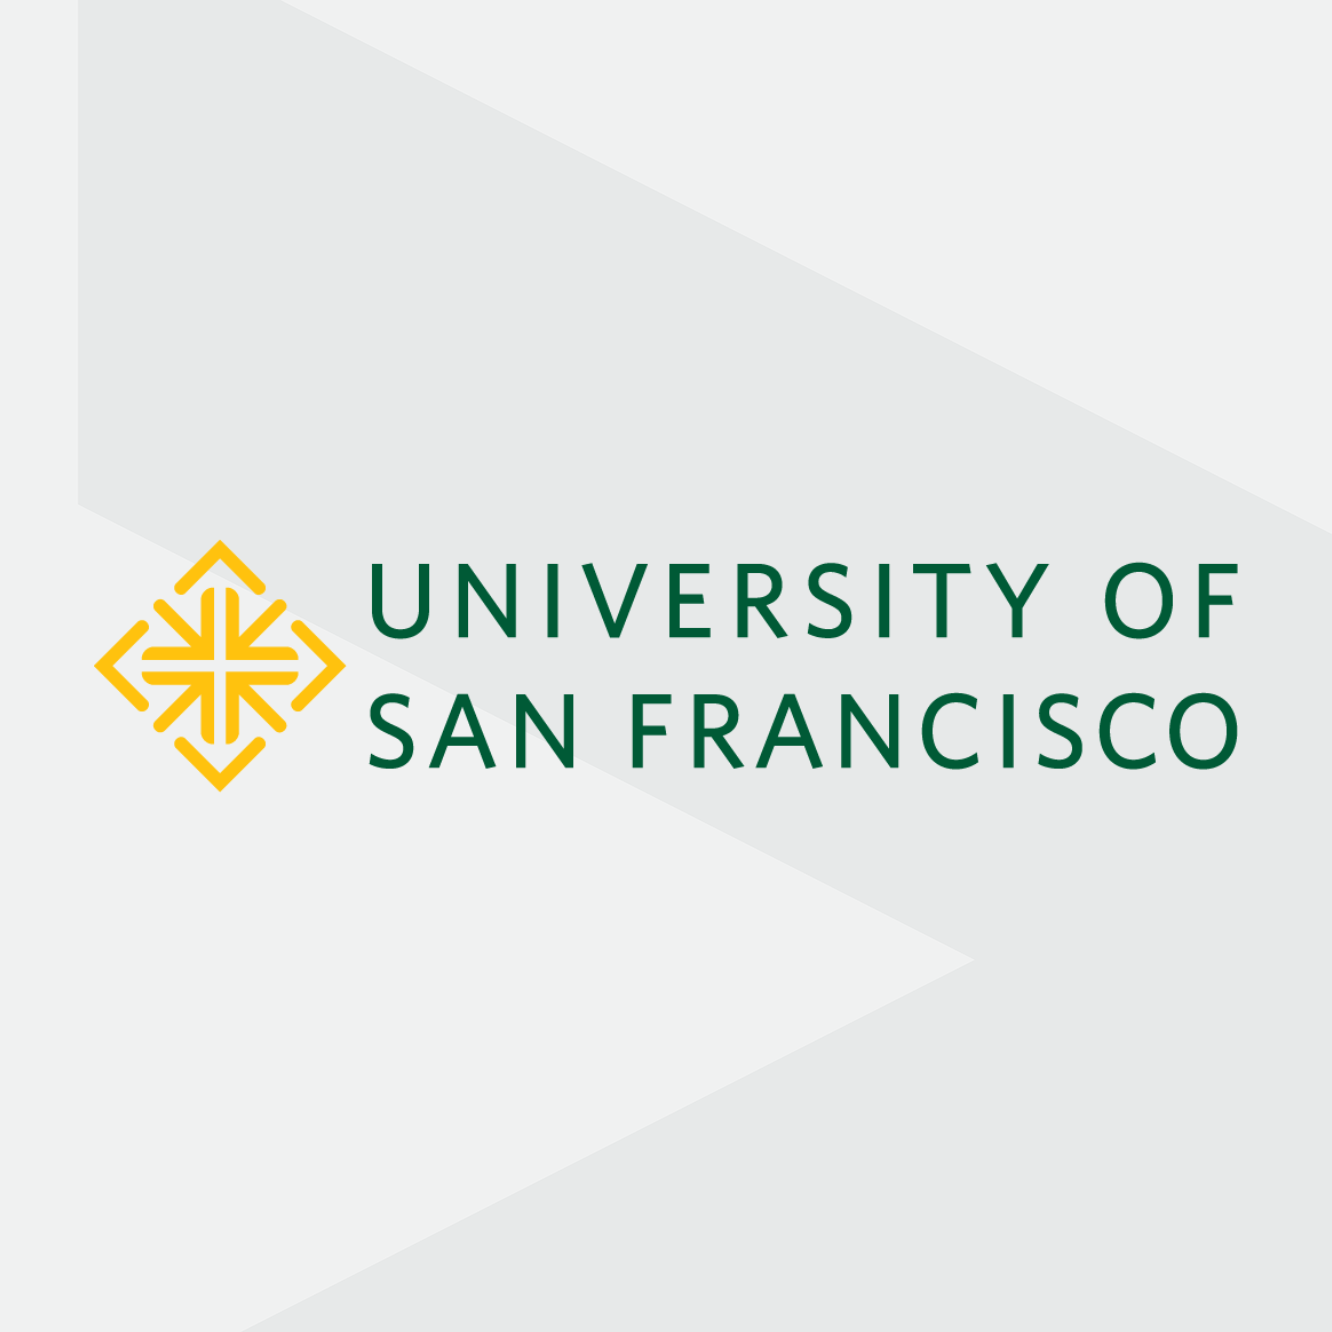 University of San Francisco case study